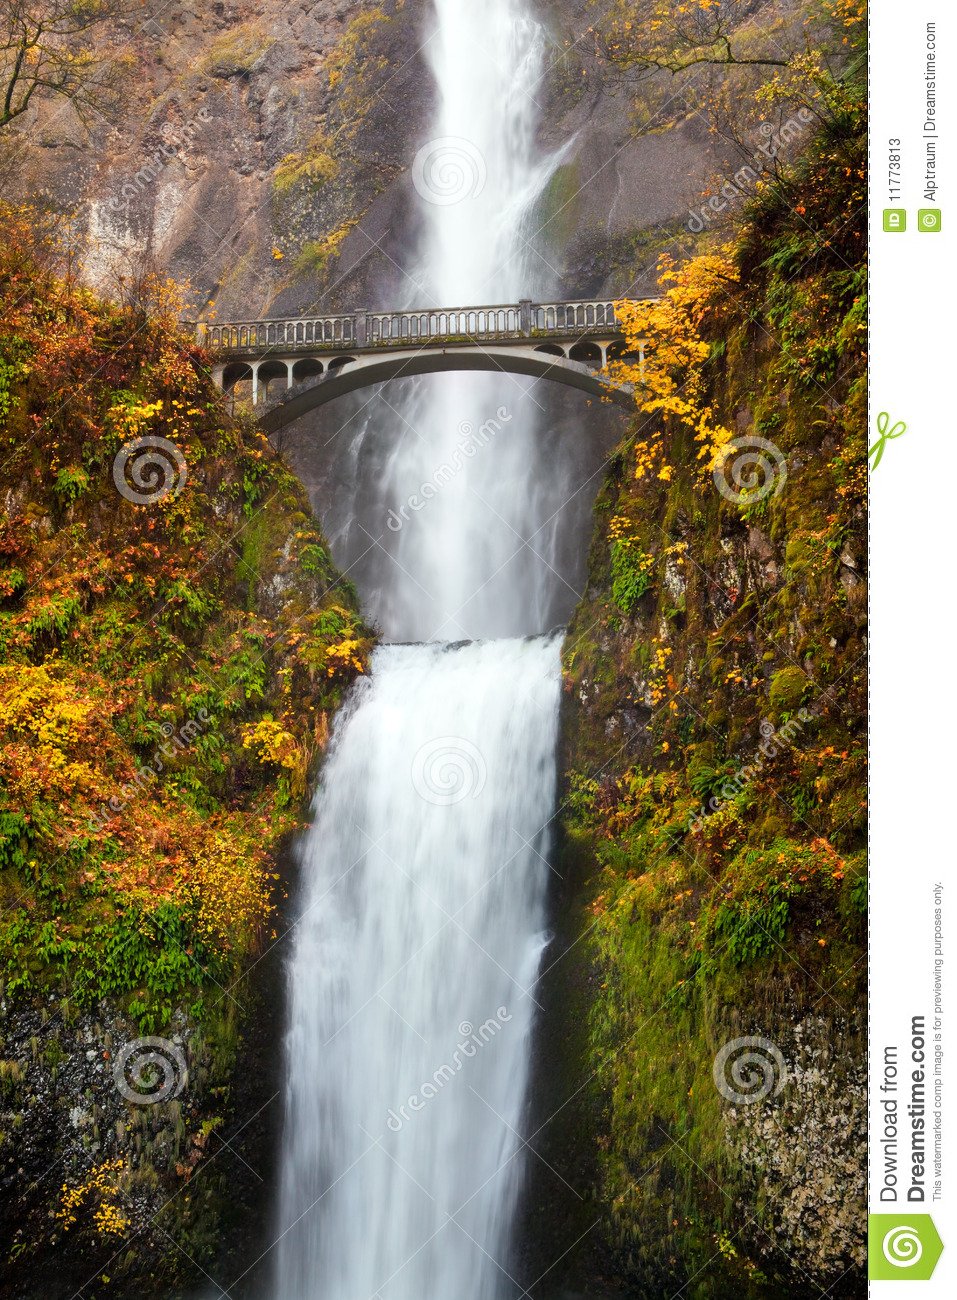  Waterfall Multnomah Falls In Oregon Stock Photos Image 11773813 Pic